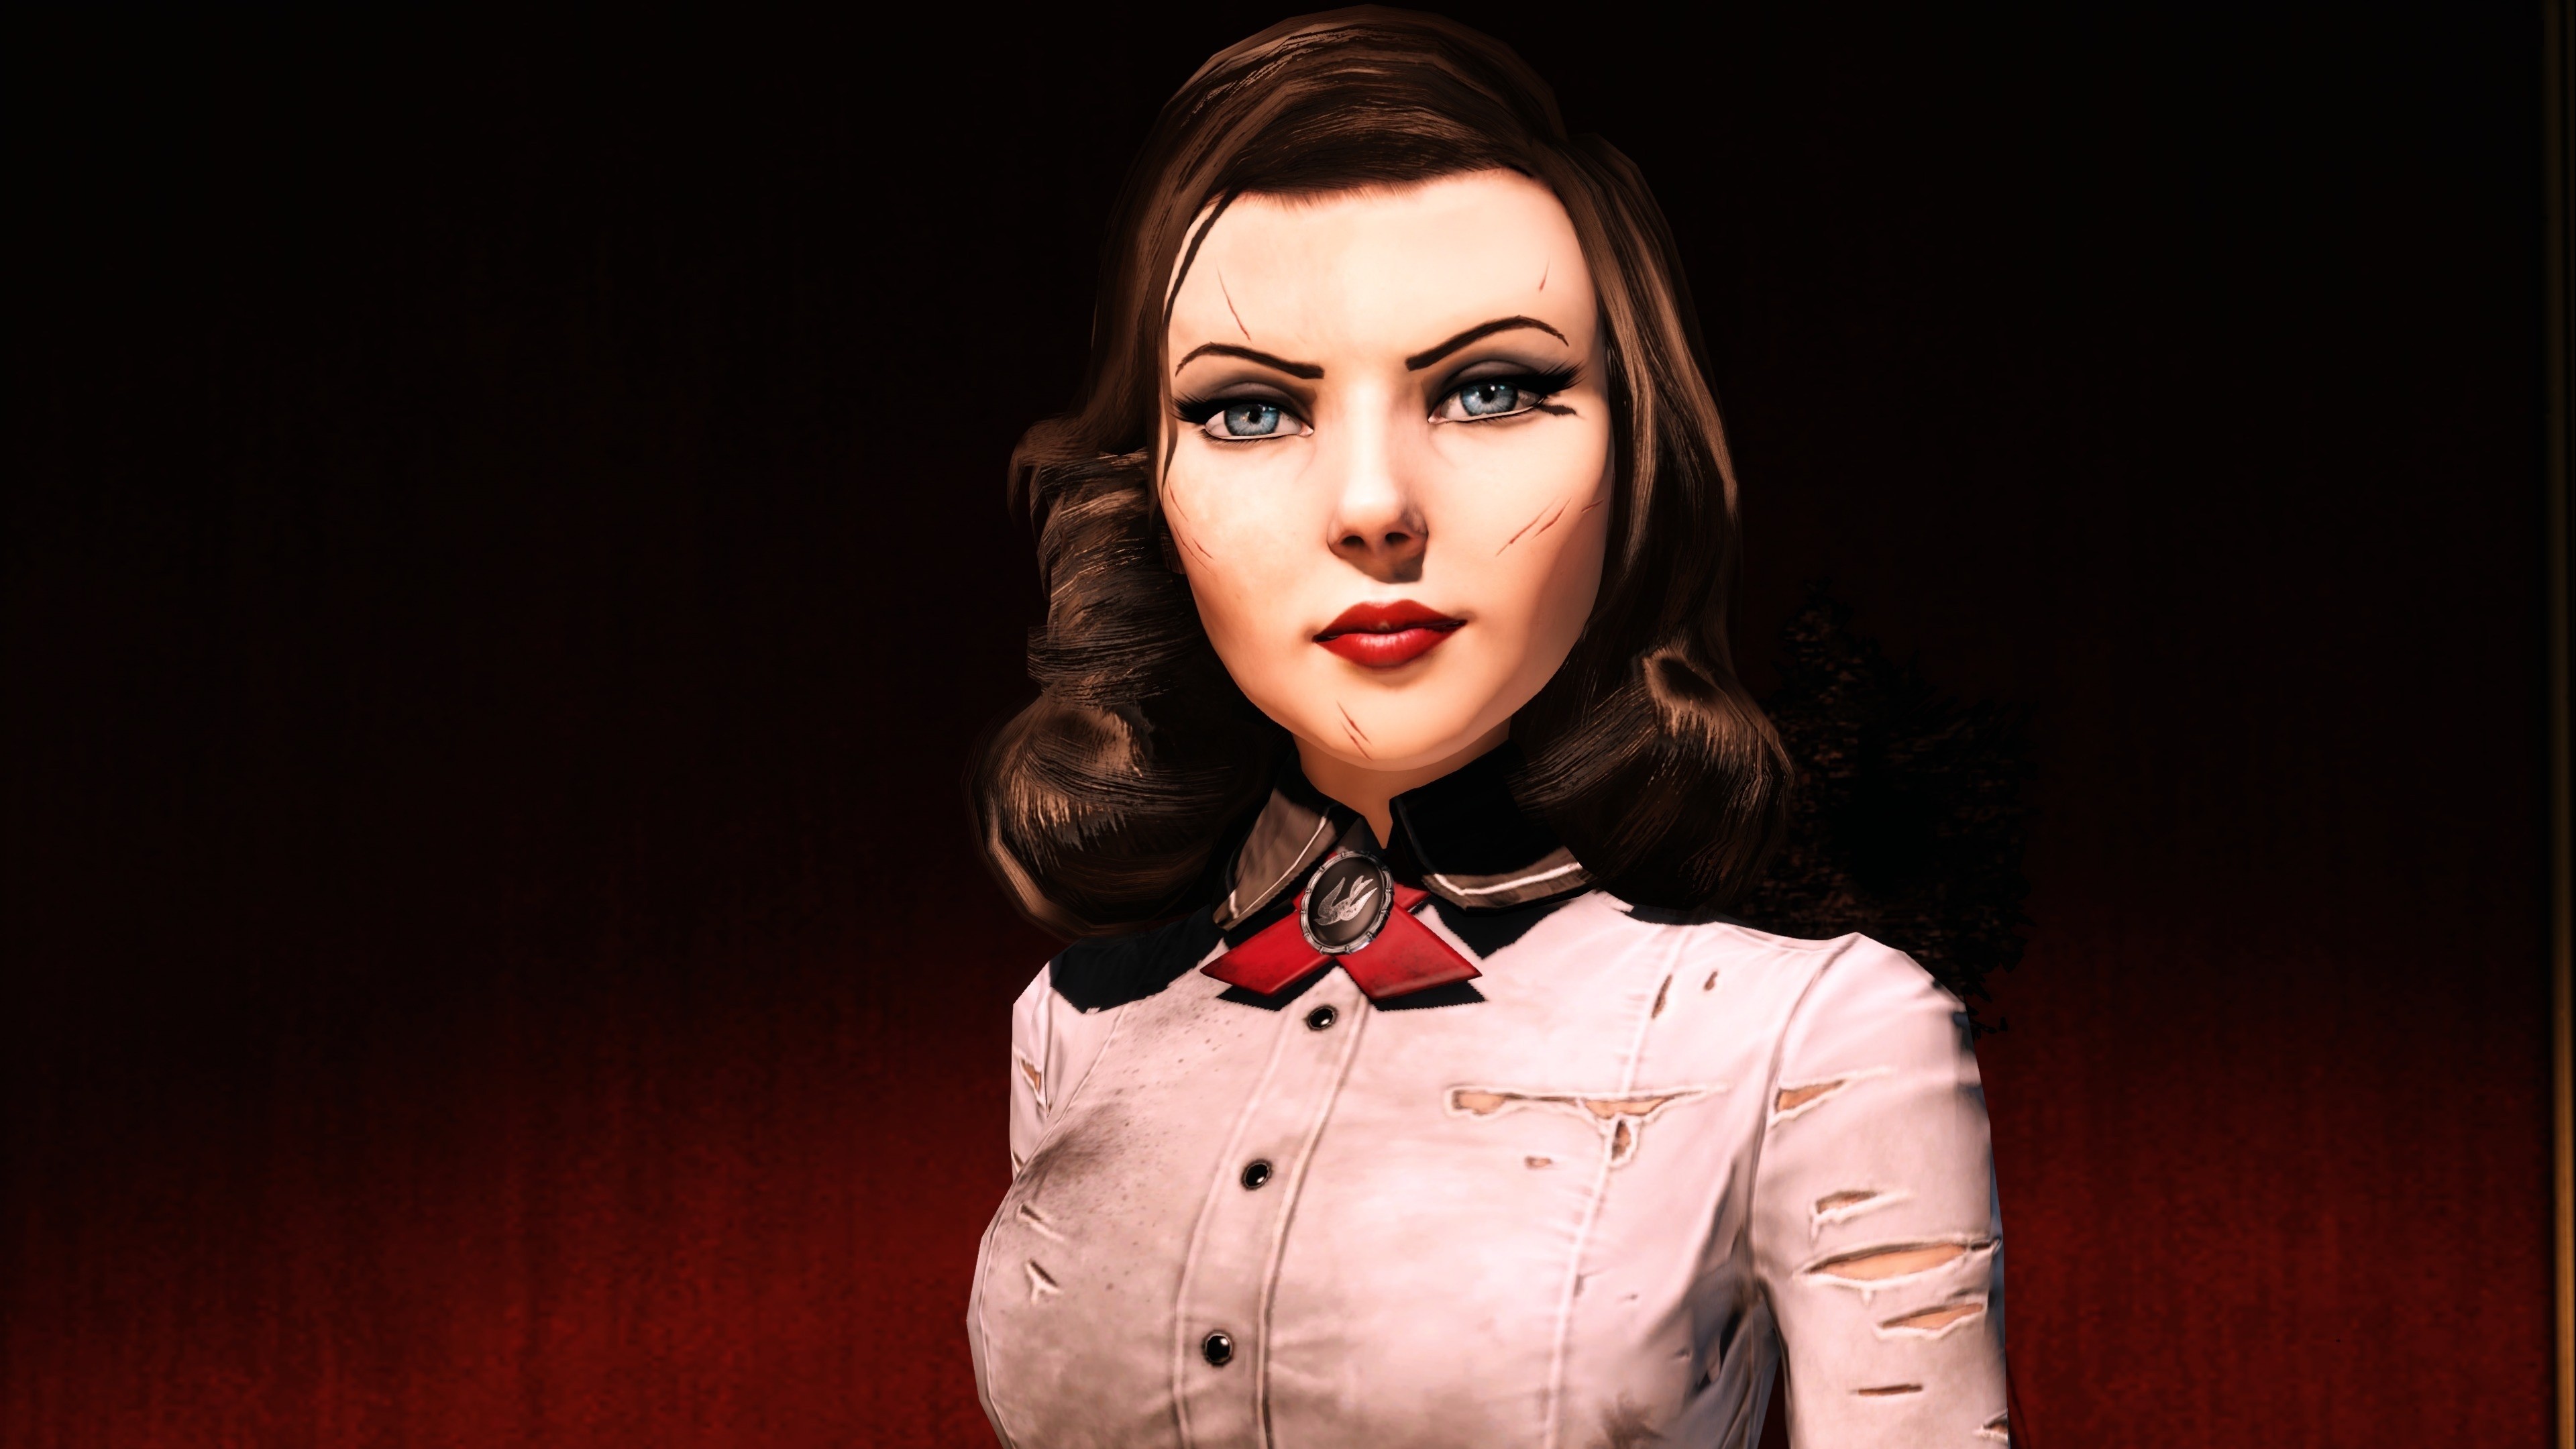 General 3840x2160 BioShock BioShock Infinite video games Elizabeth (BioShock) PC gaming red lipstick women